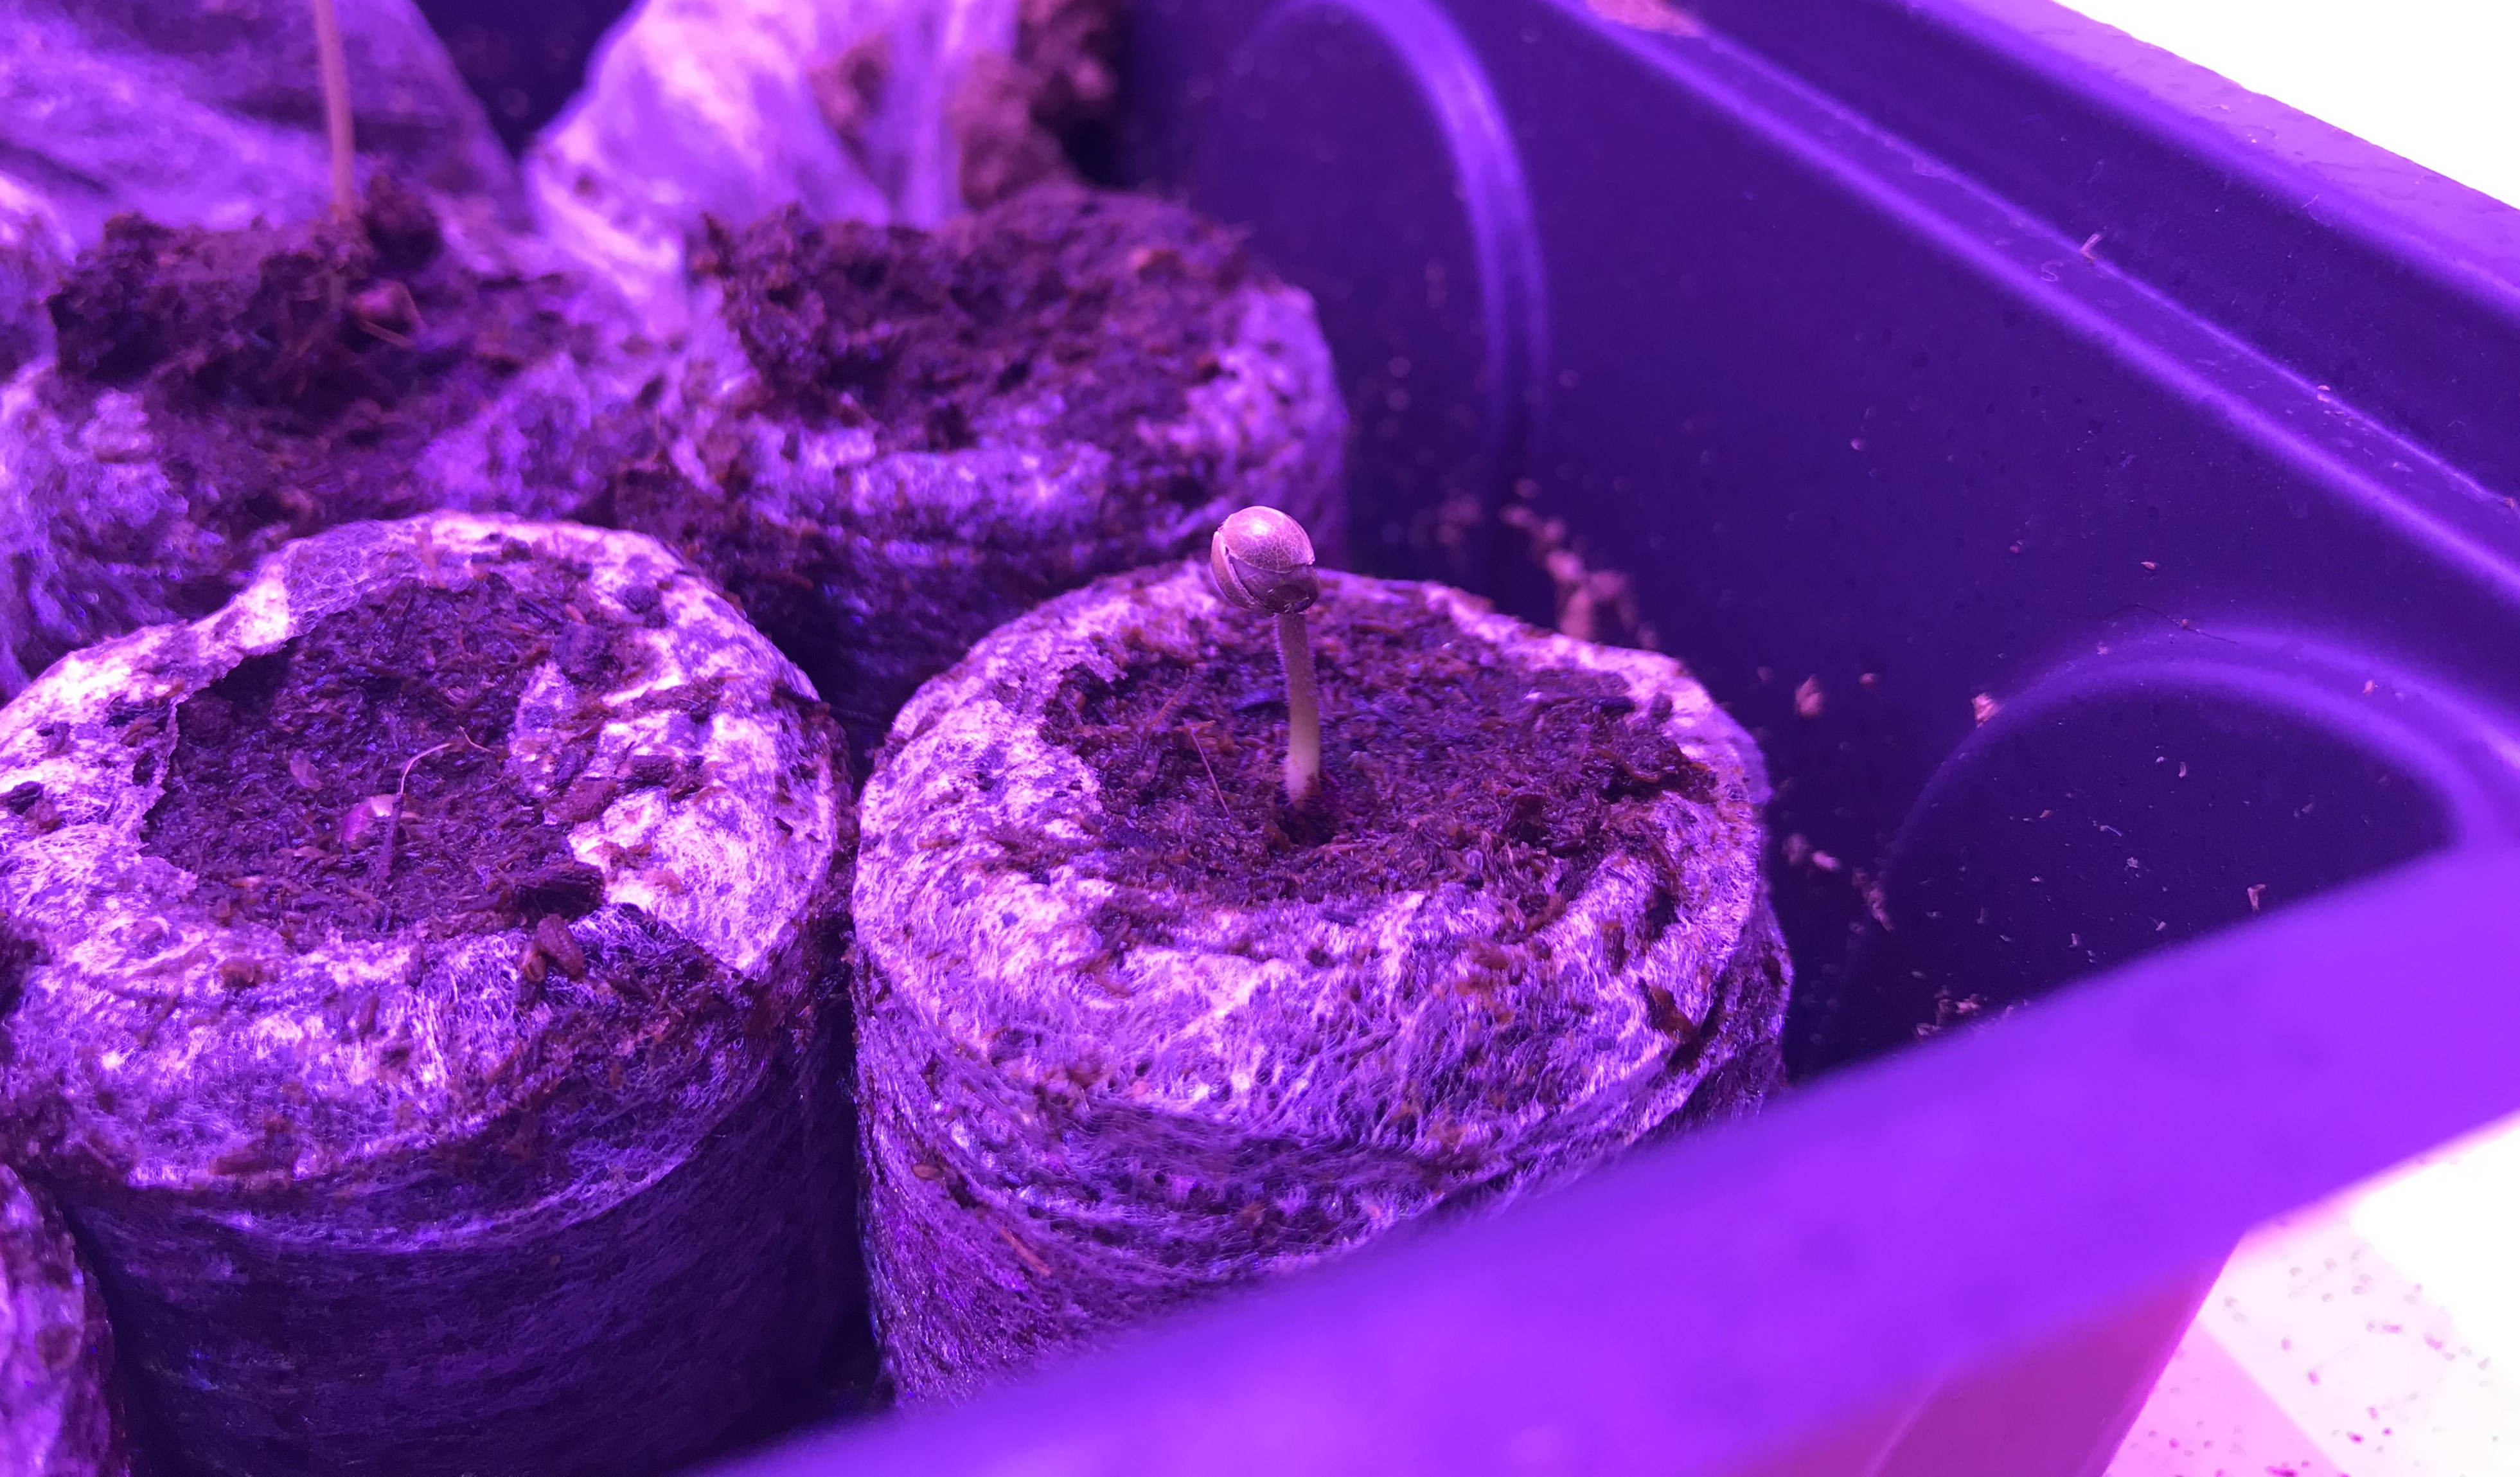 germinating cannabis seeds